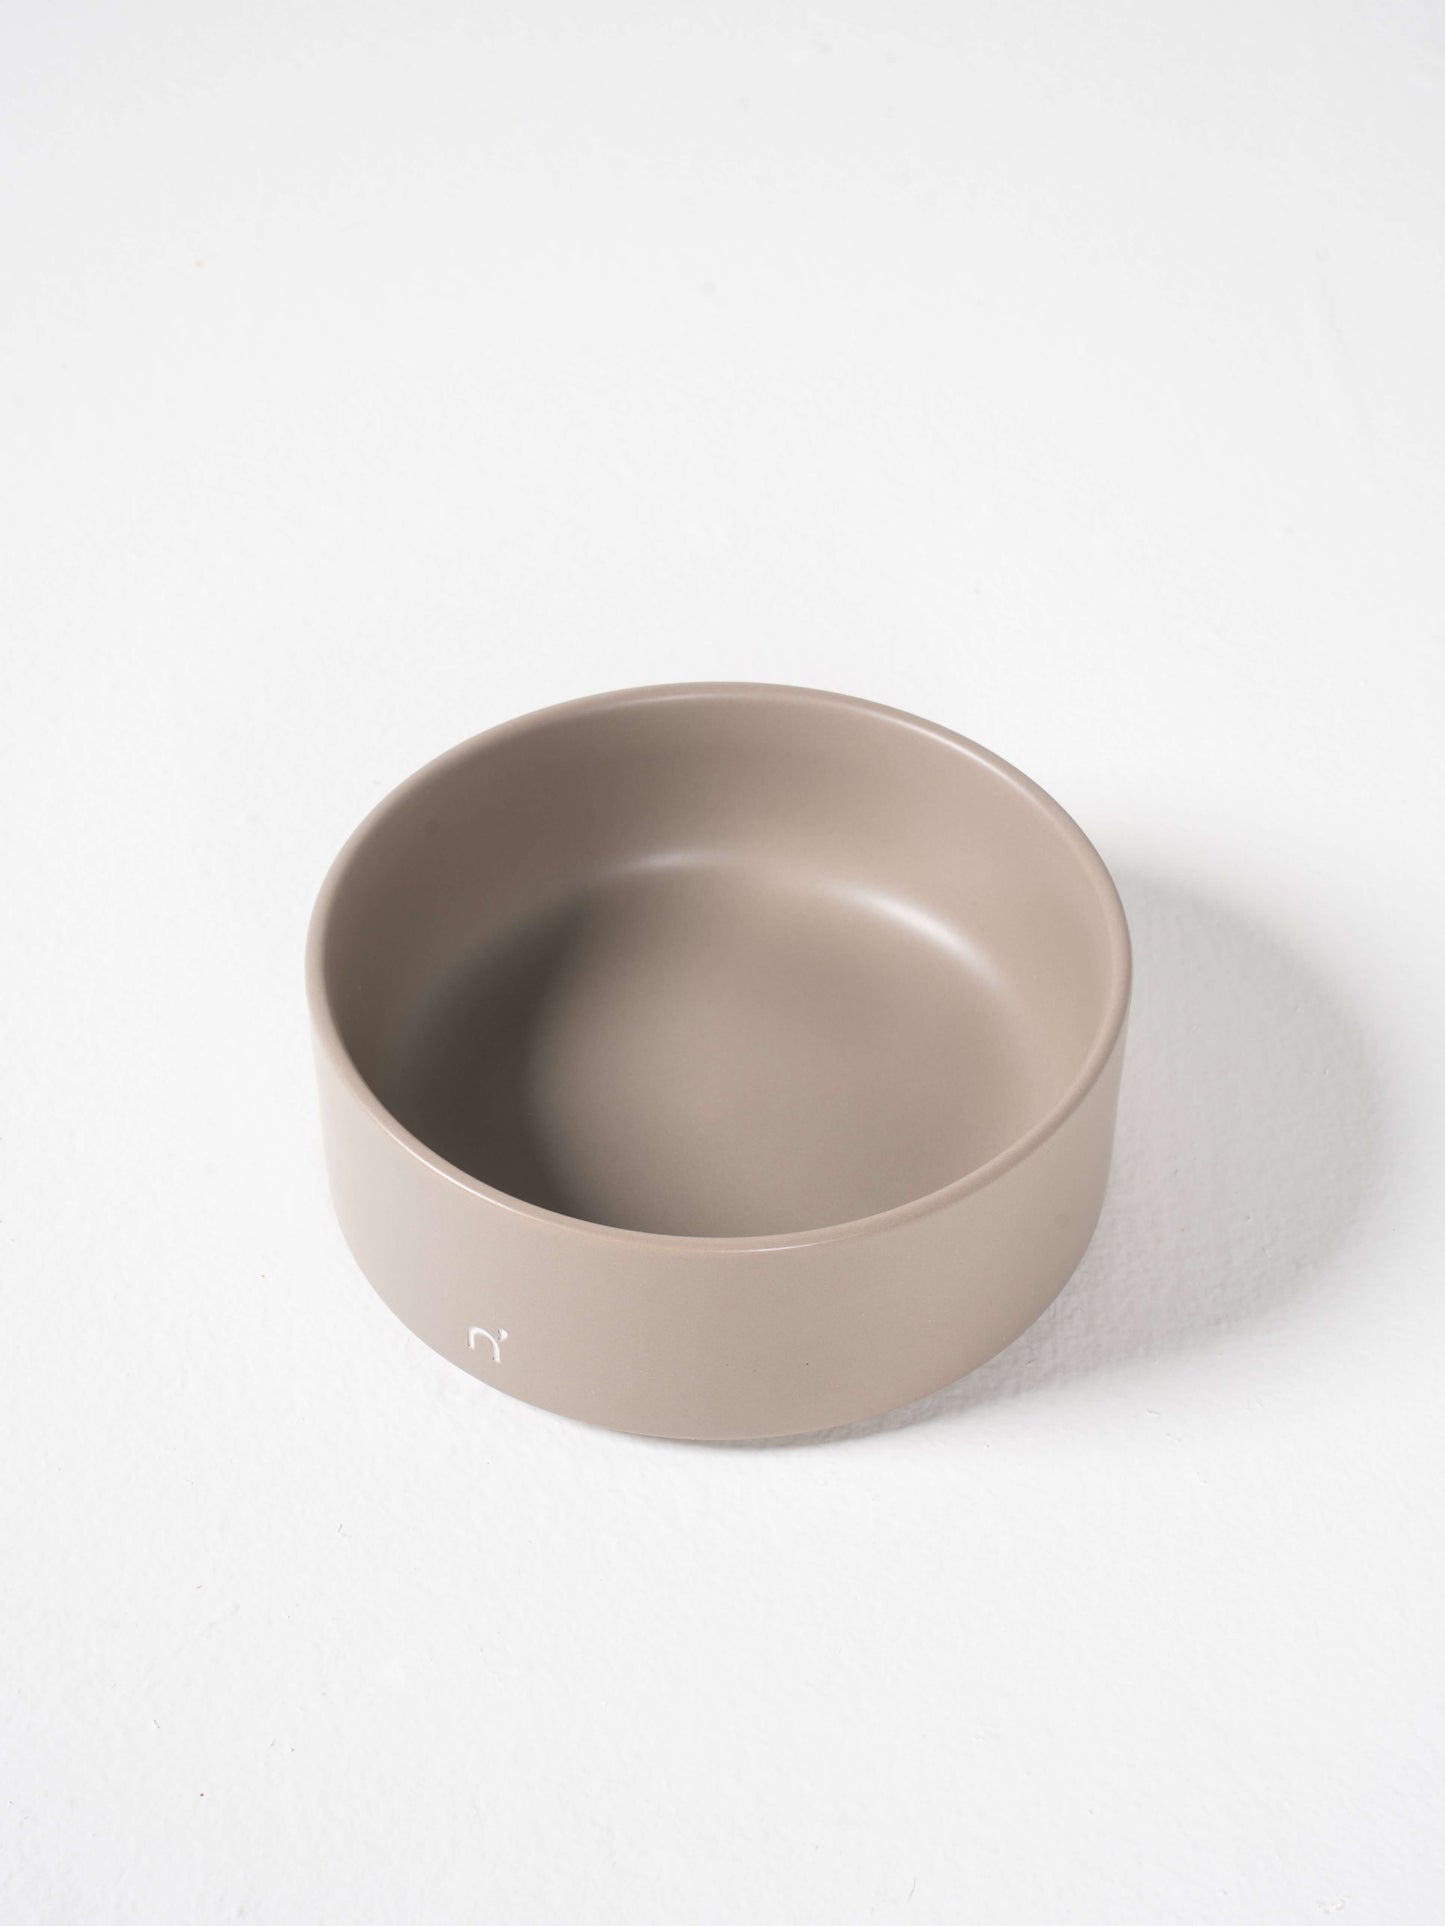 Ceramic Pet Bowls